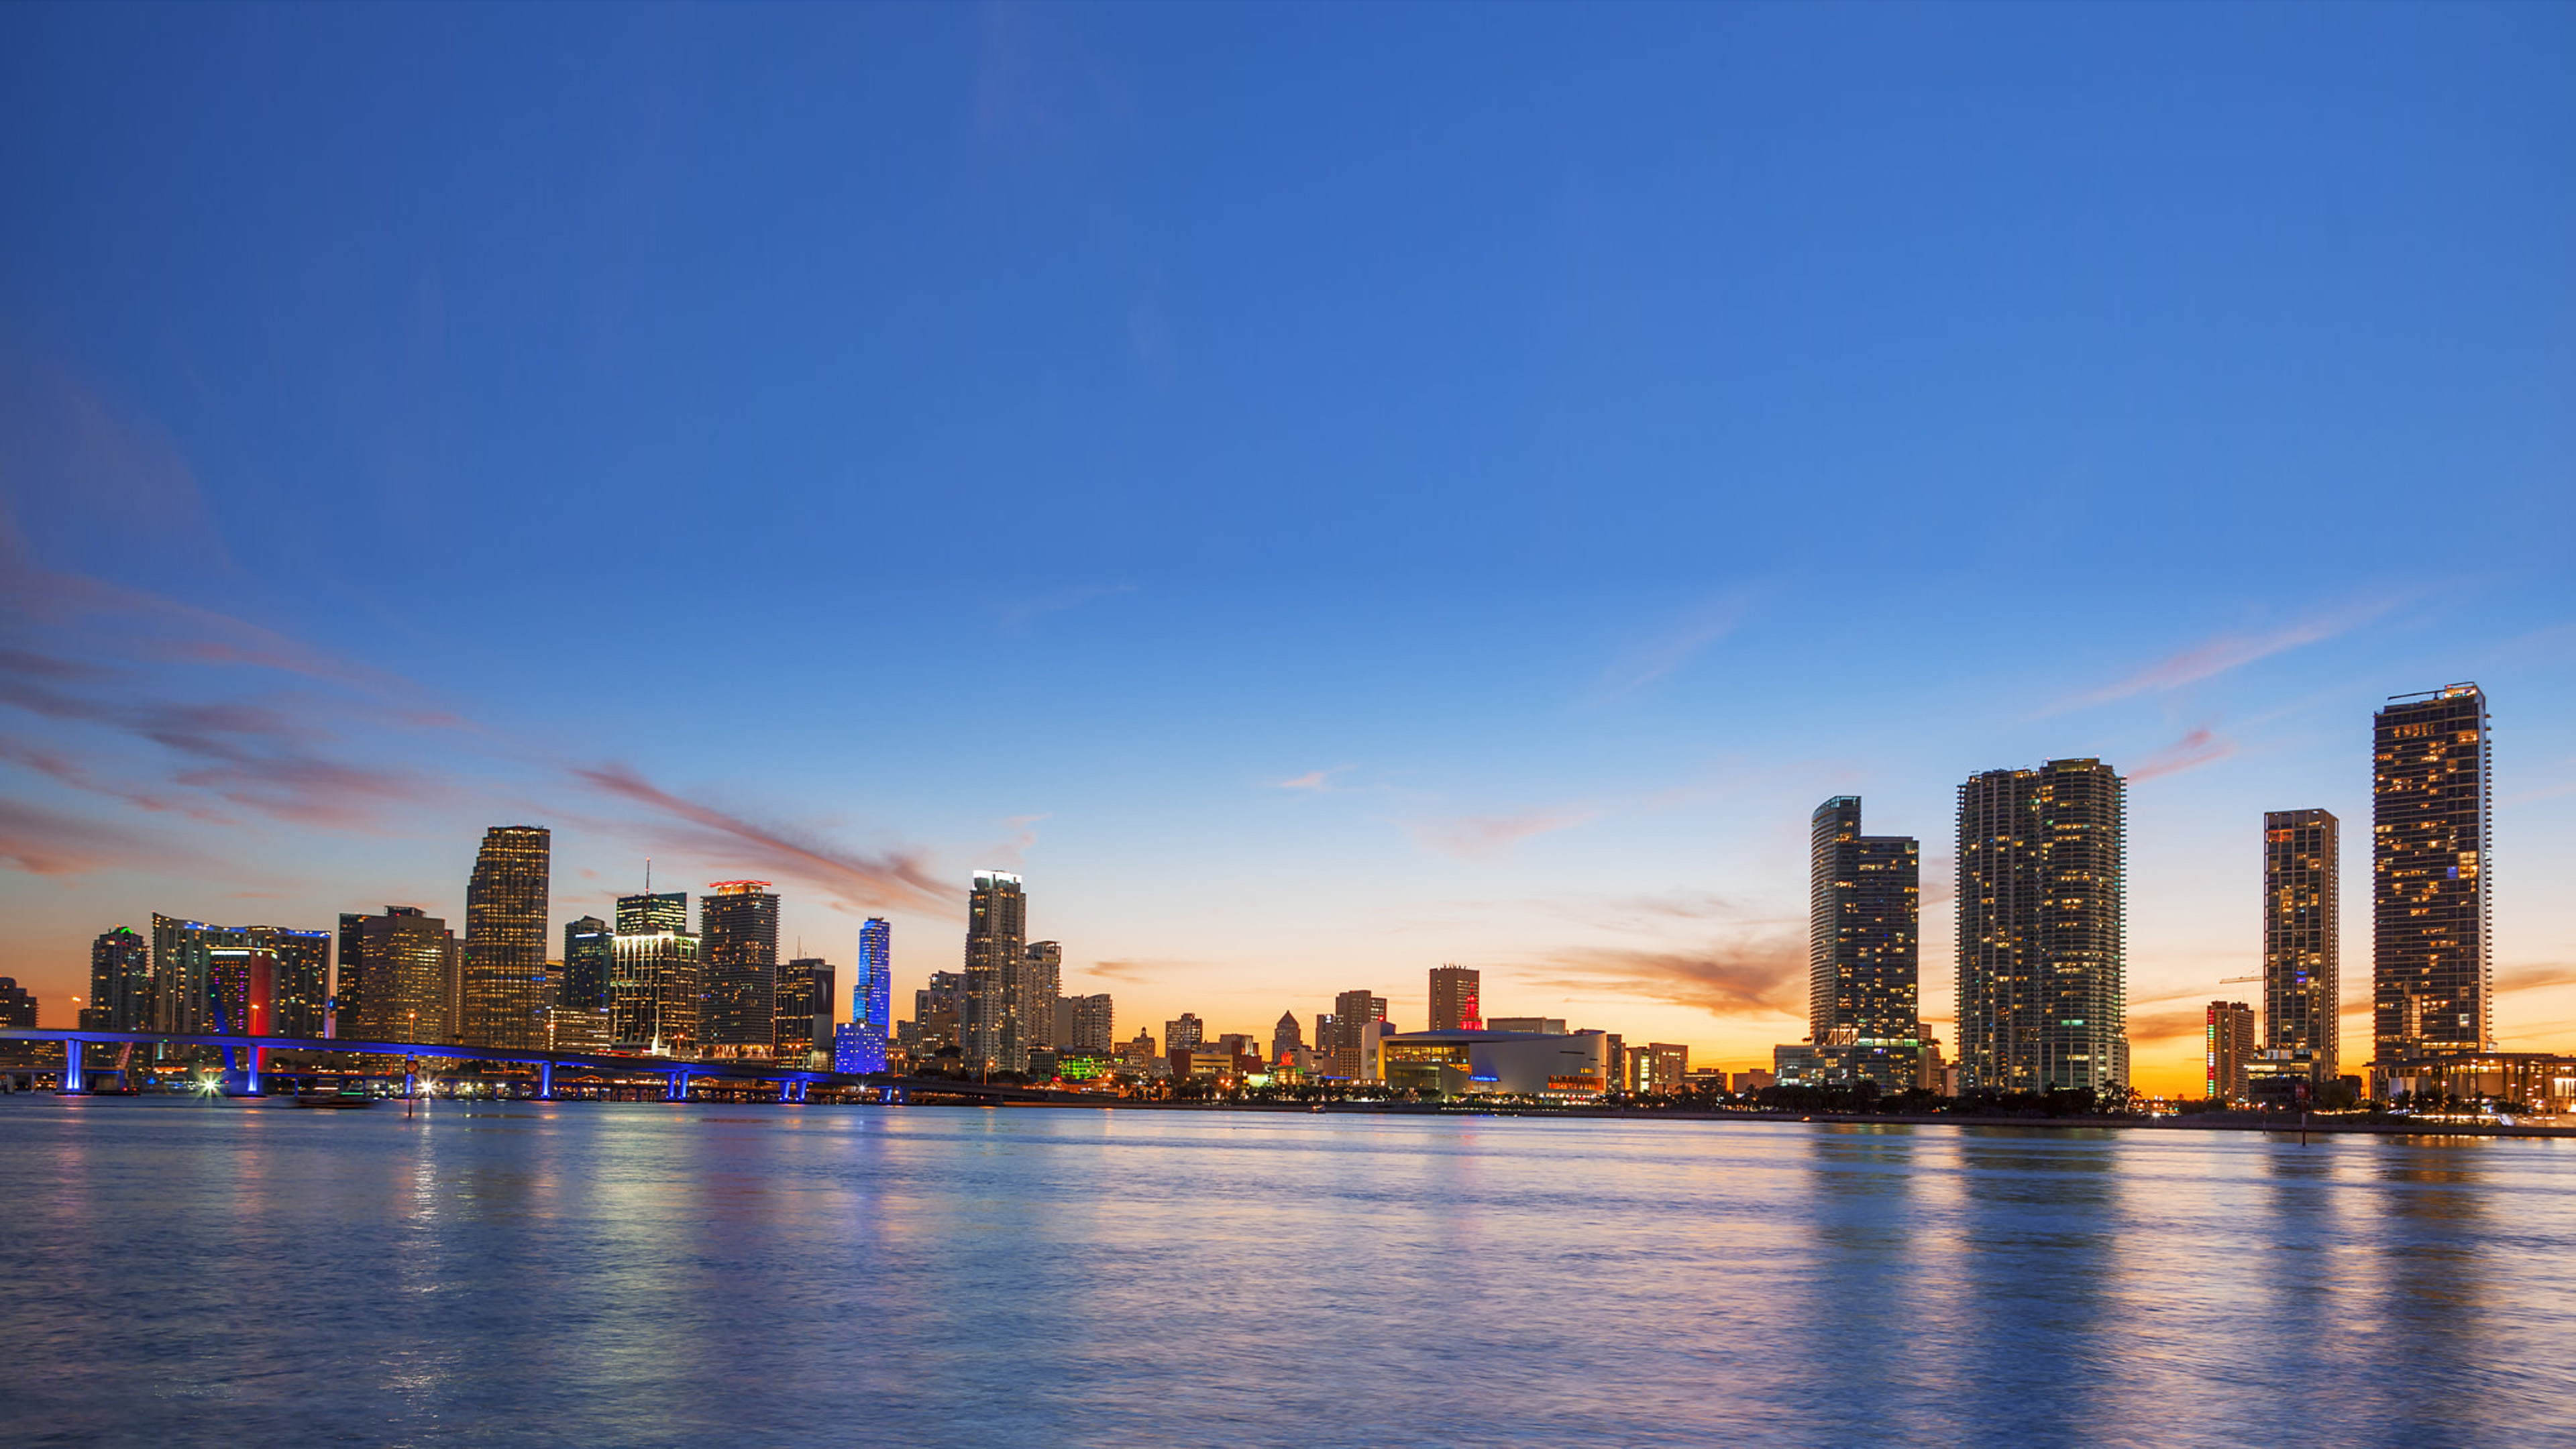 City In Florida Usa Miami At Sunset Panorama 4k Ultra Hd Wallpaper For Desktop Laptop